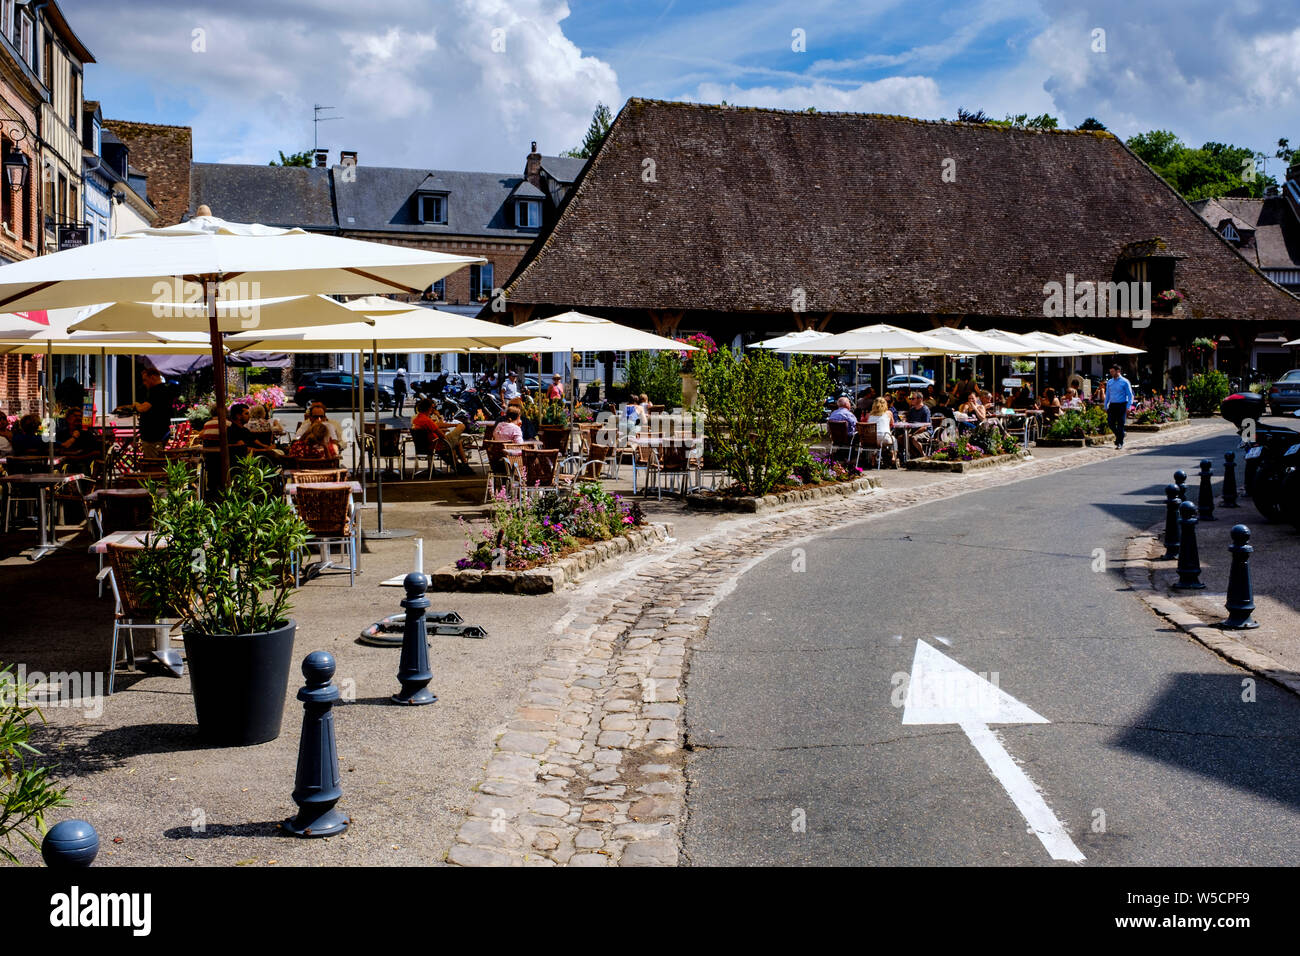 Cafe Brasserie in the village of Lyons-la-Forêt, Normandy, France. Stock Photo